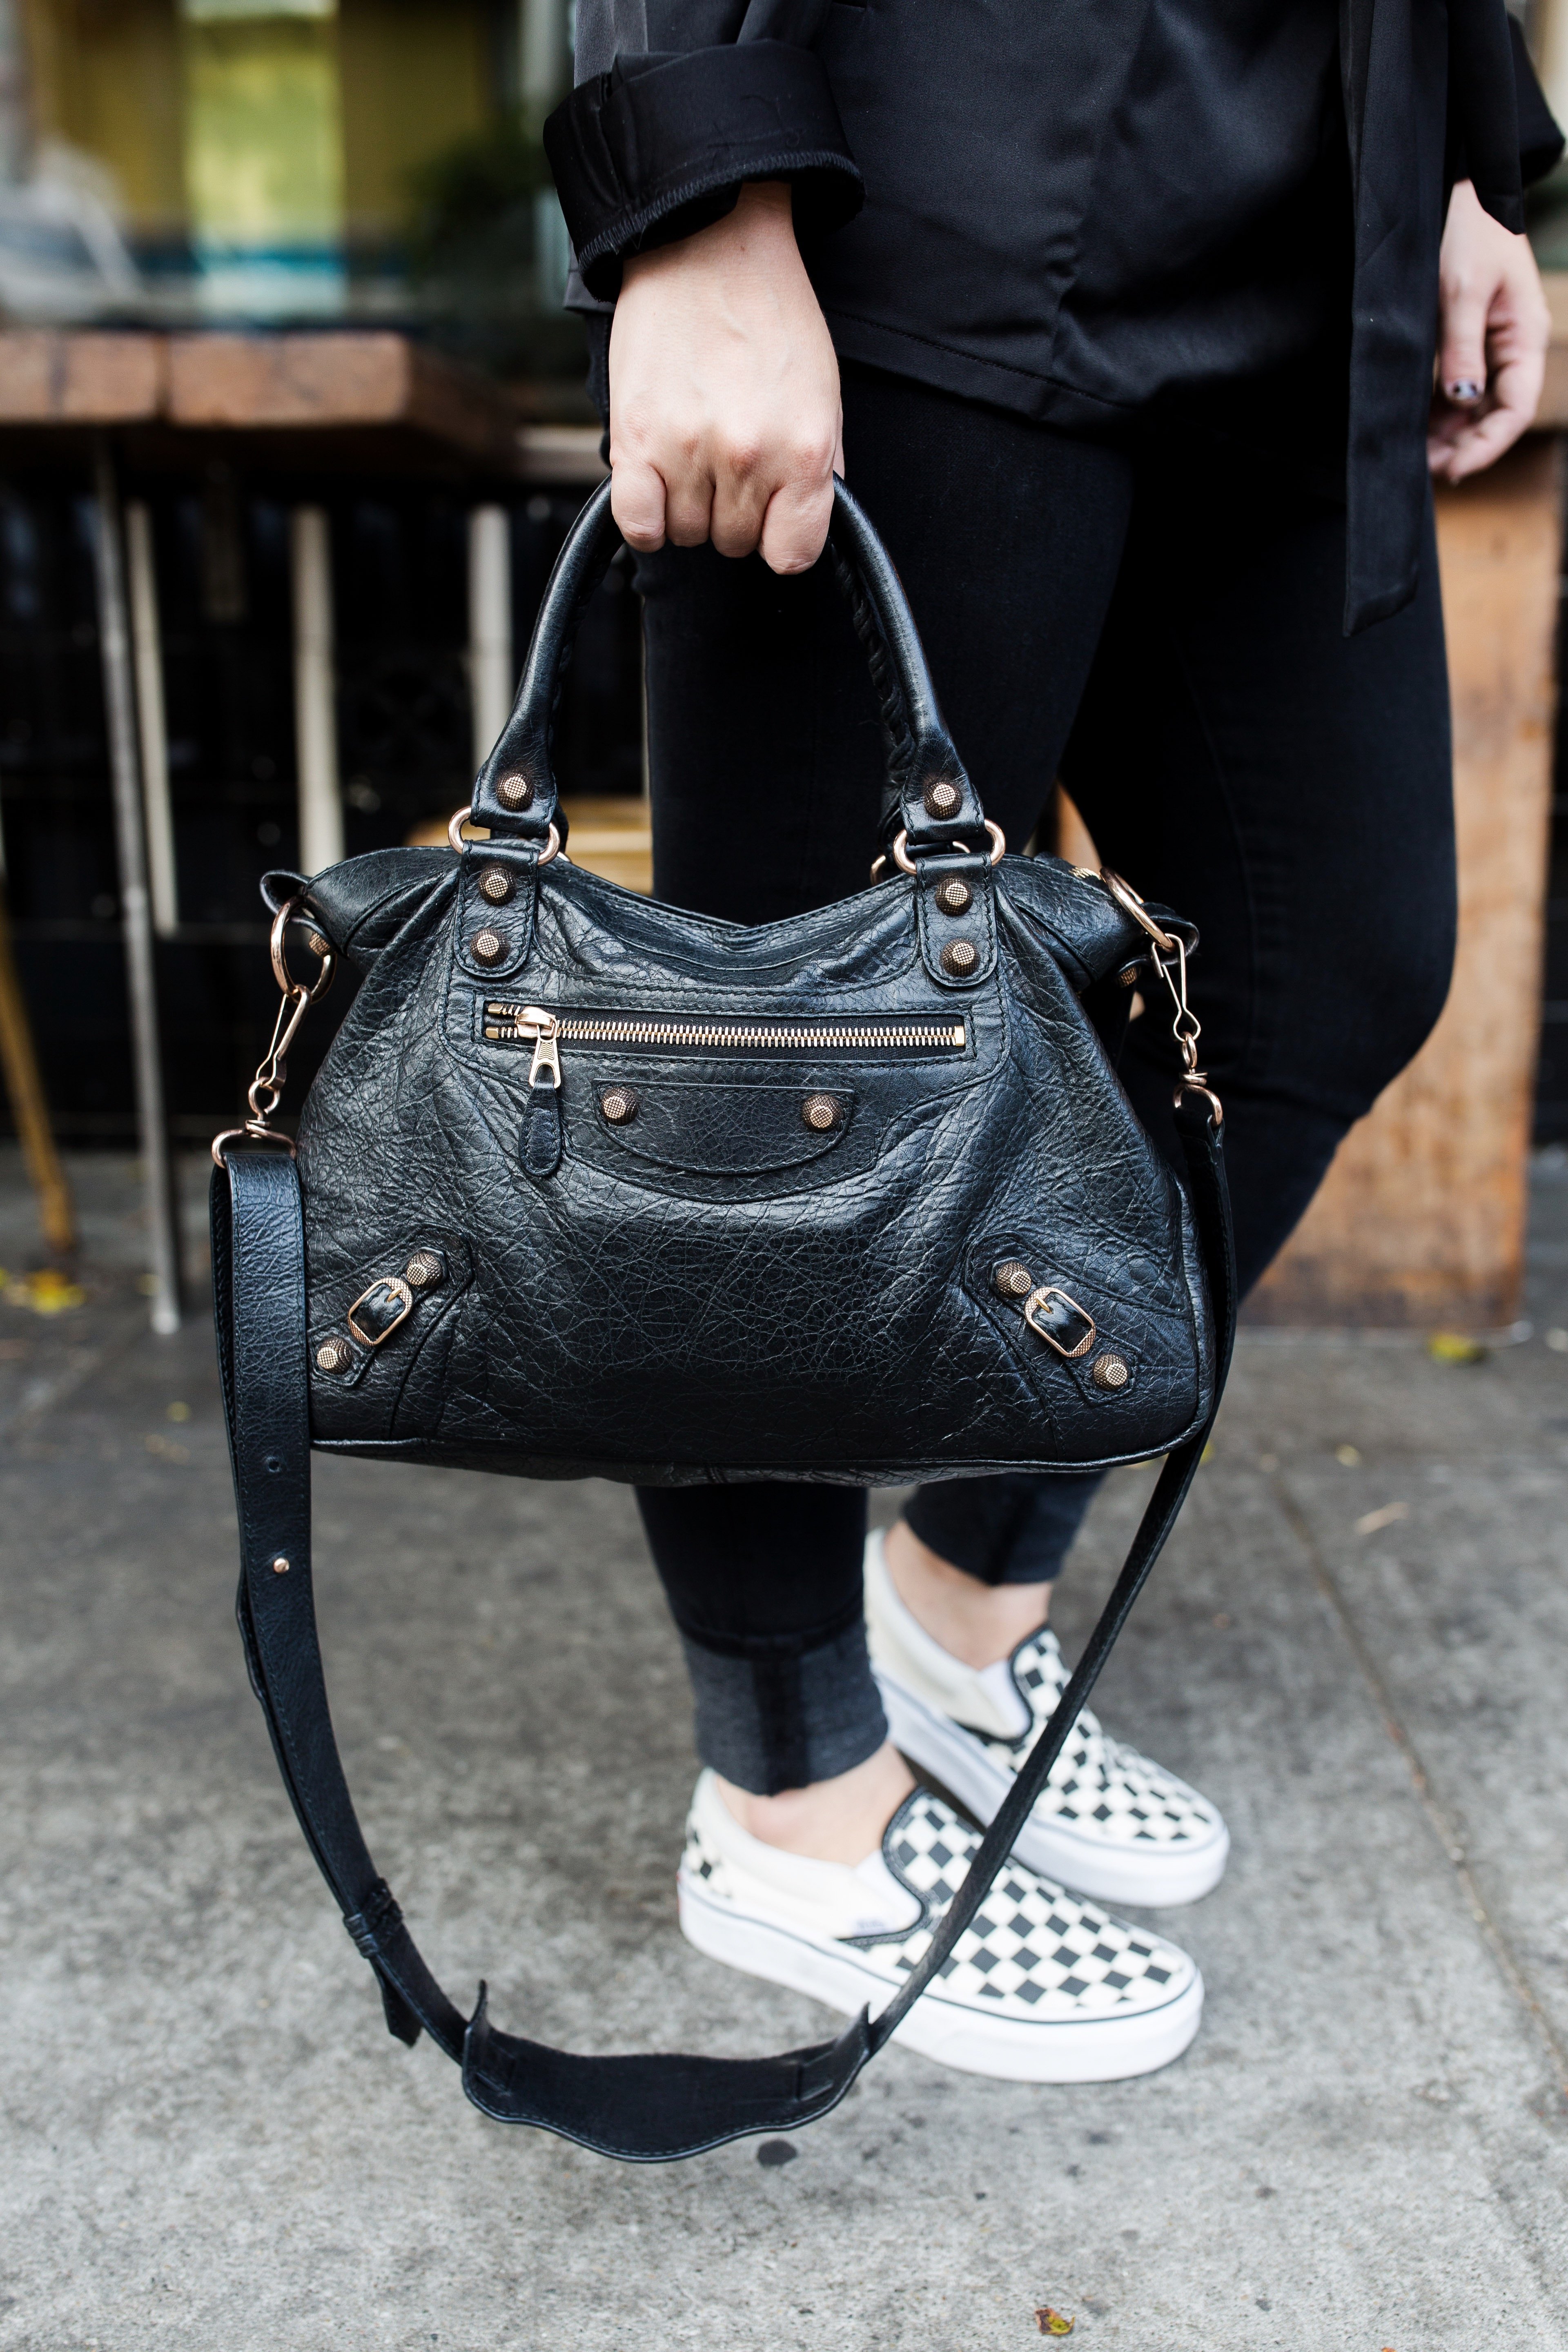 How to buy designer handbags on eBay - save money & look expensive!